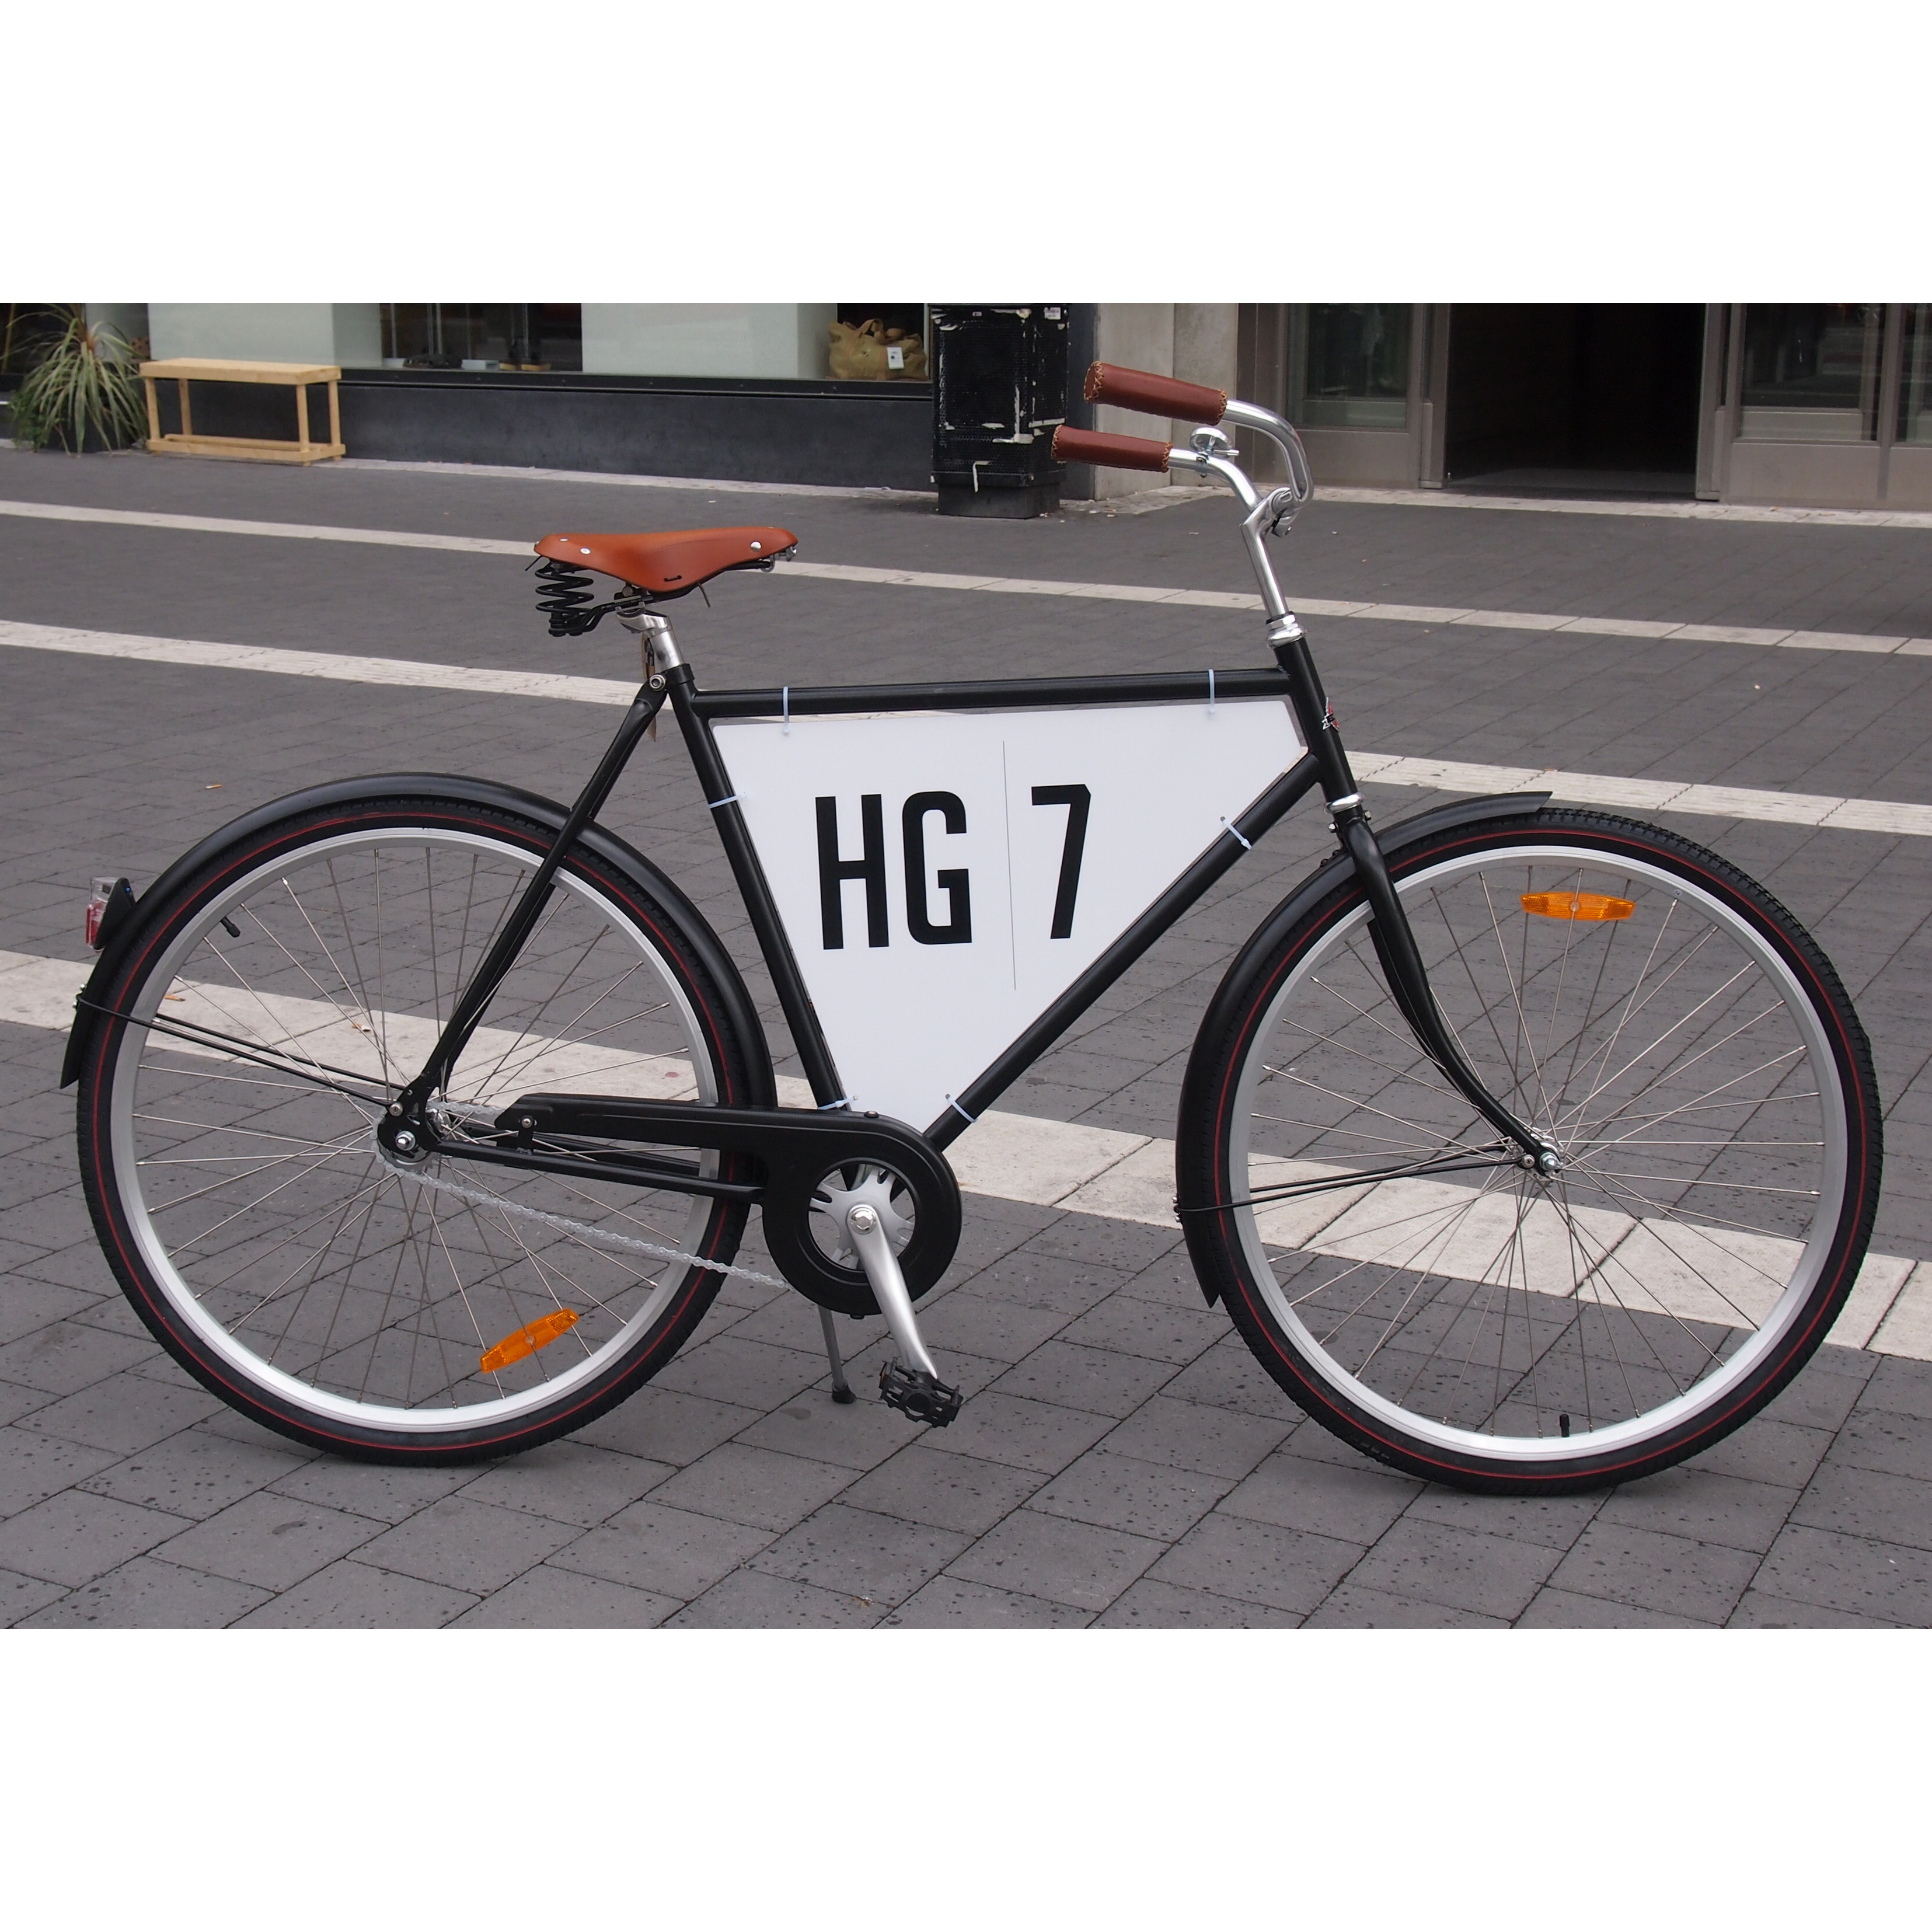 HG7 cykel herr